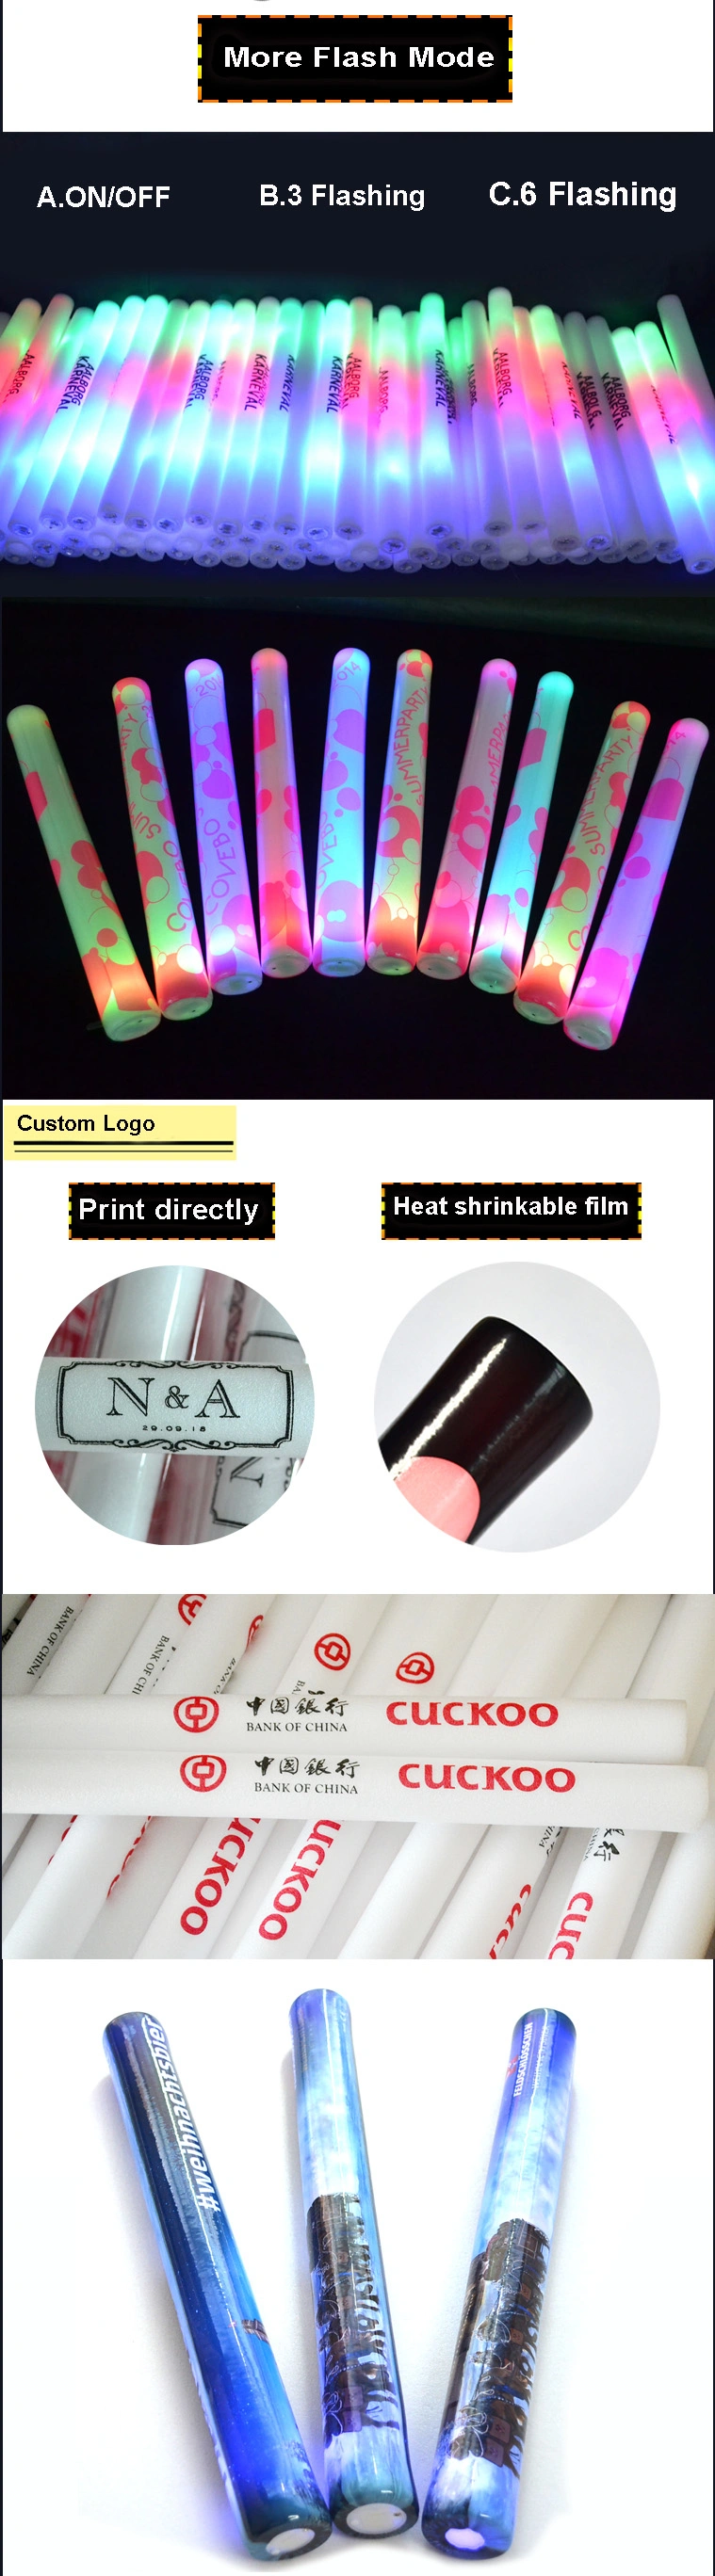 Linli OEM Brand Logo Printed Promotional Multi Color Chaning LED Glow Flashing Foam Stick, Sponge Foam Stick, Light Stick